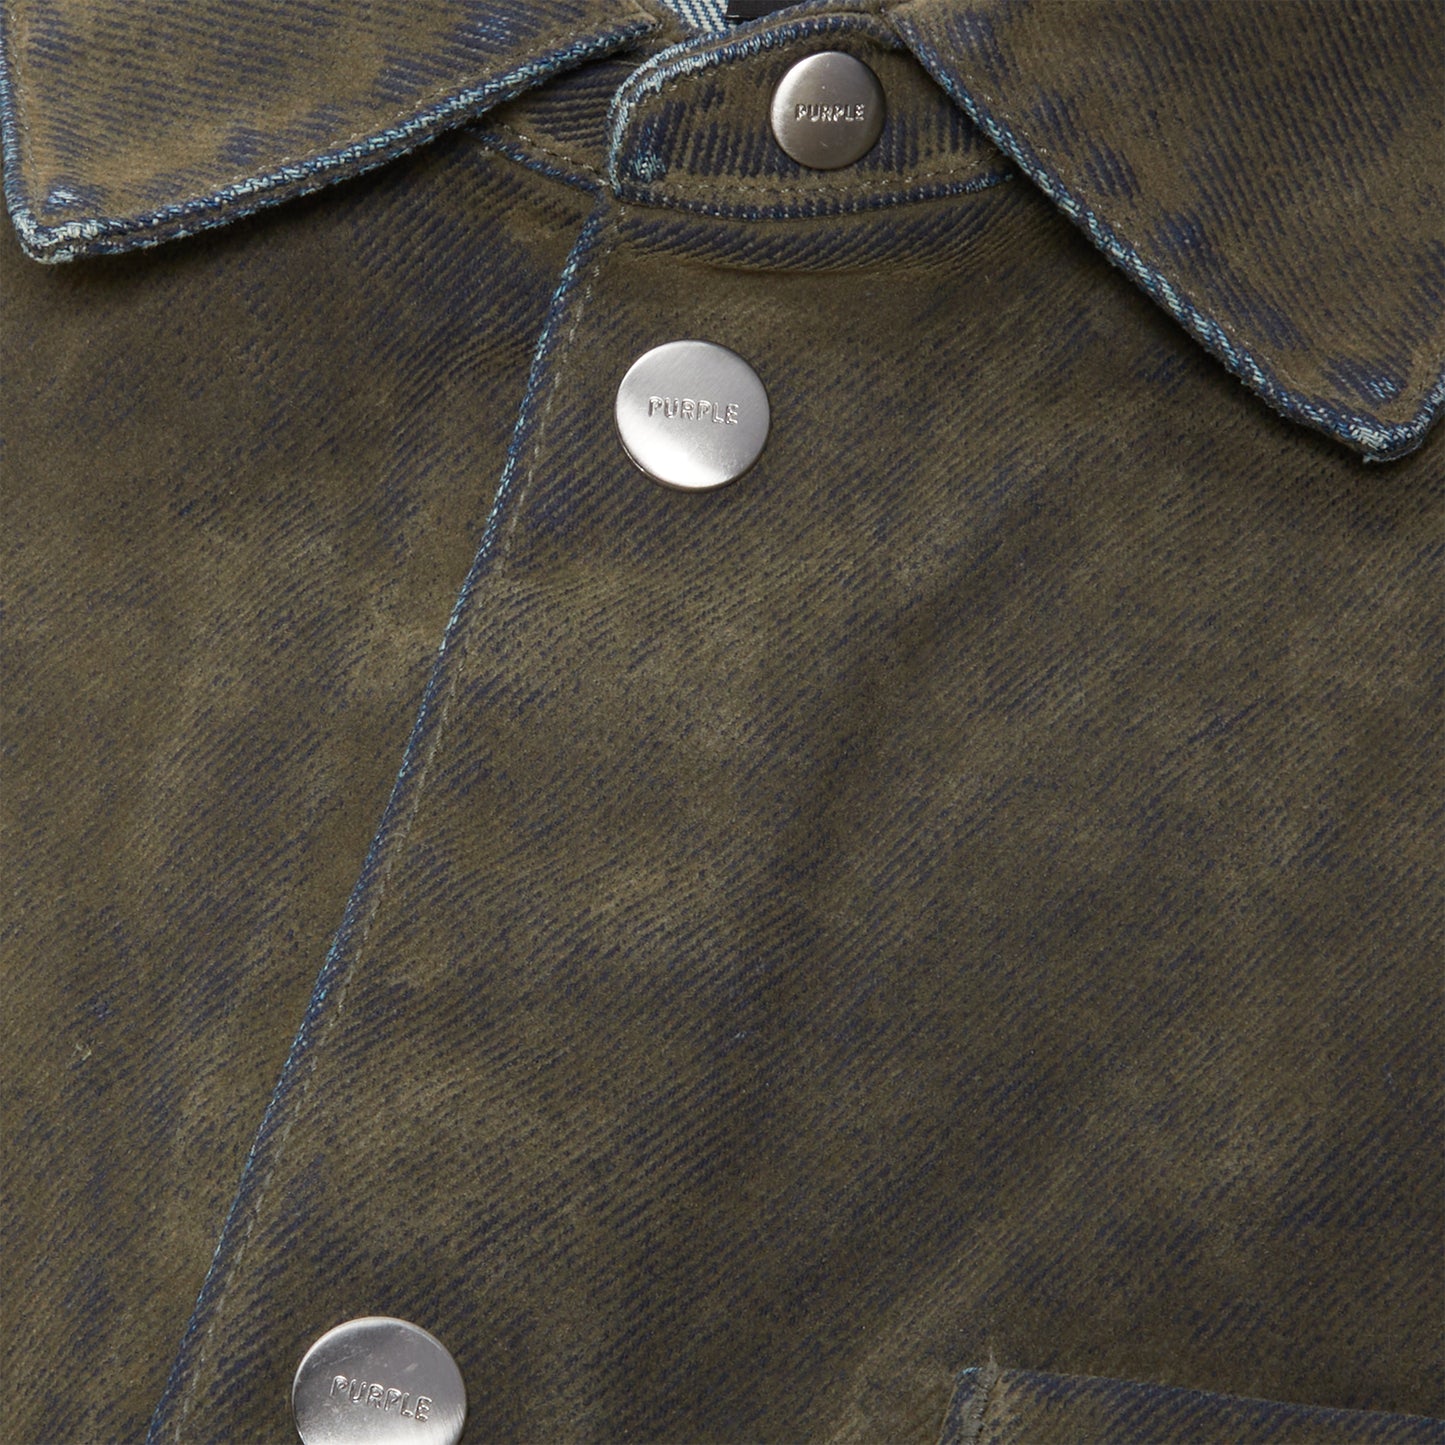 PURPLE Brand Long Sleeve Flocked Shirt Jacket (Green)